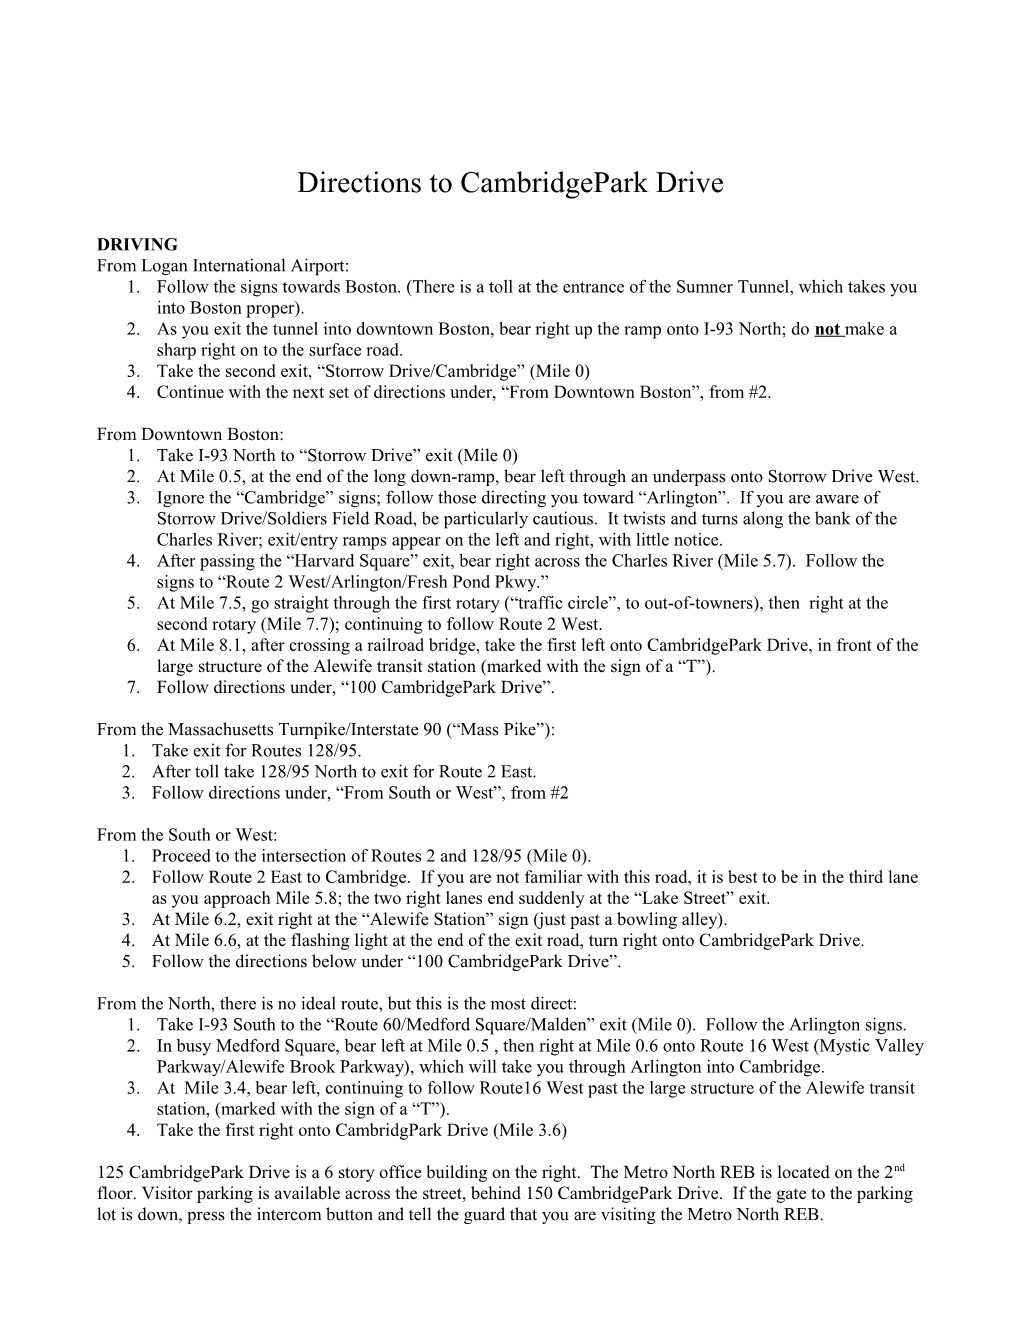 Directions to 125 Cambridgepark Drive